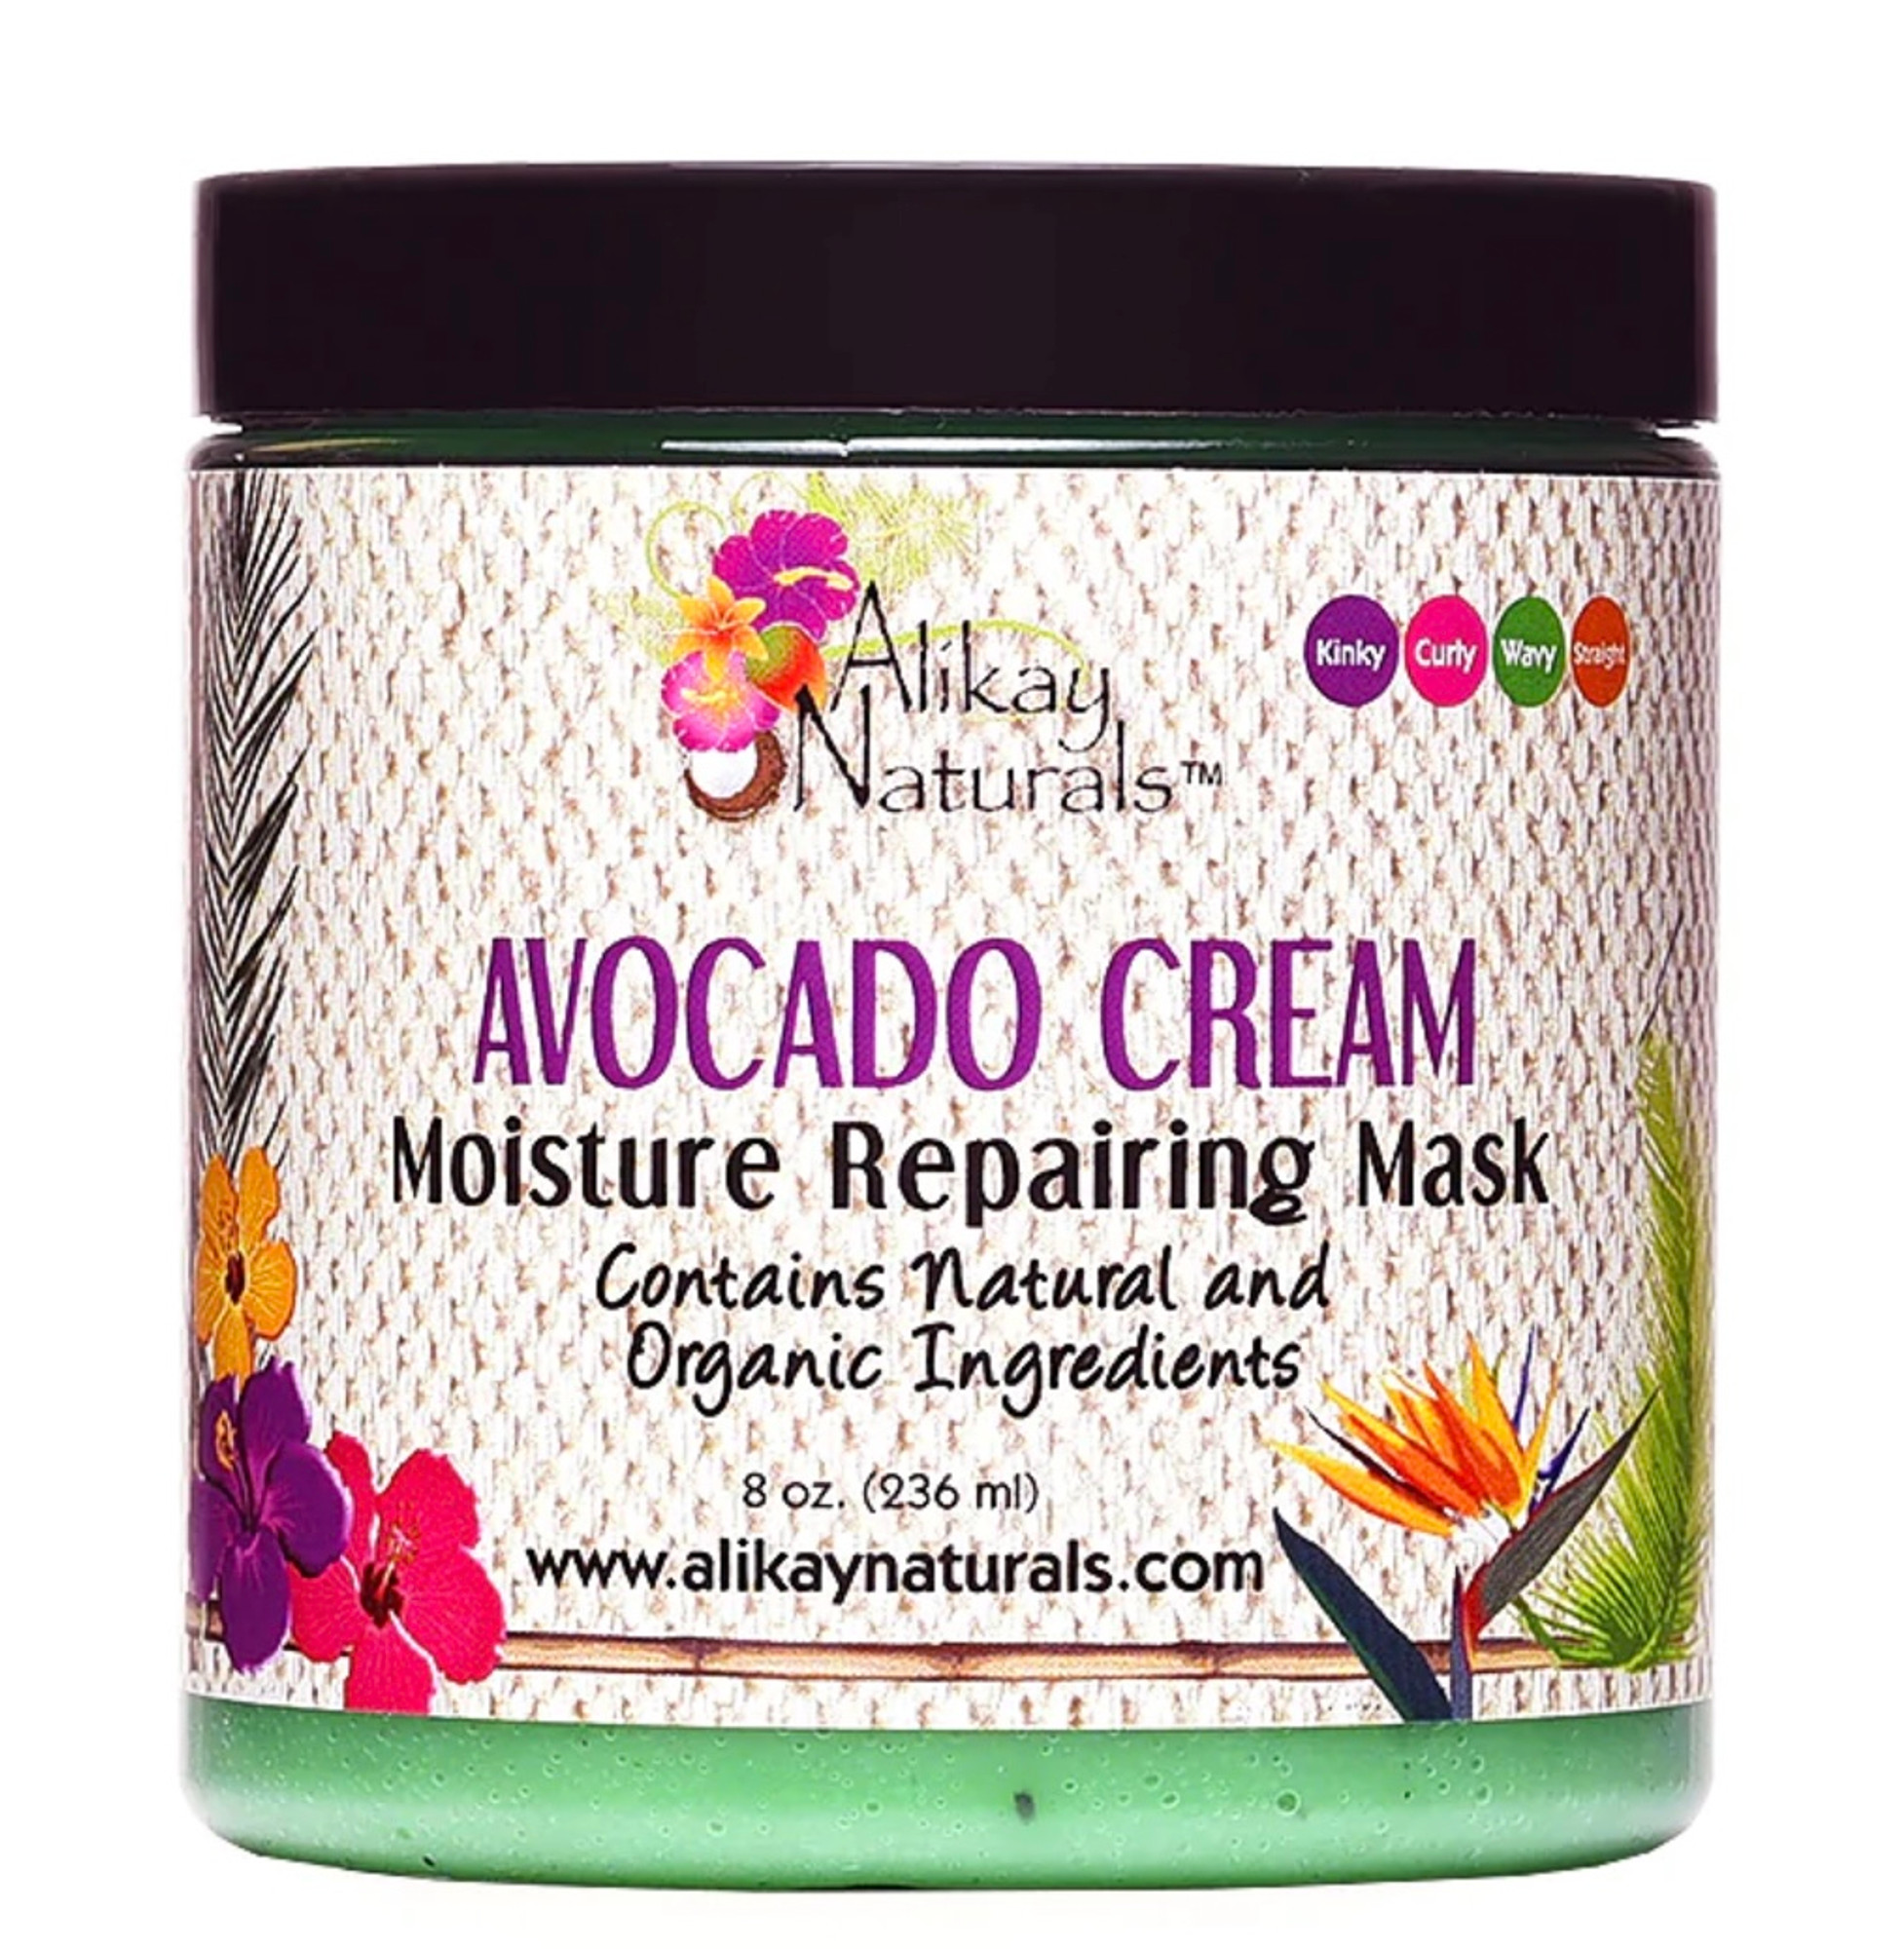 Alikay Naturals Avocado Creme Moisture Repairing Mask